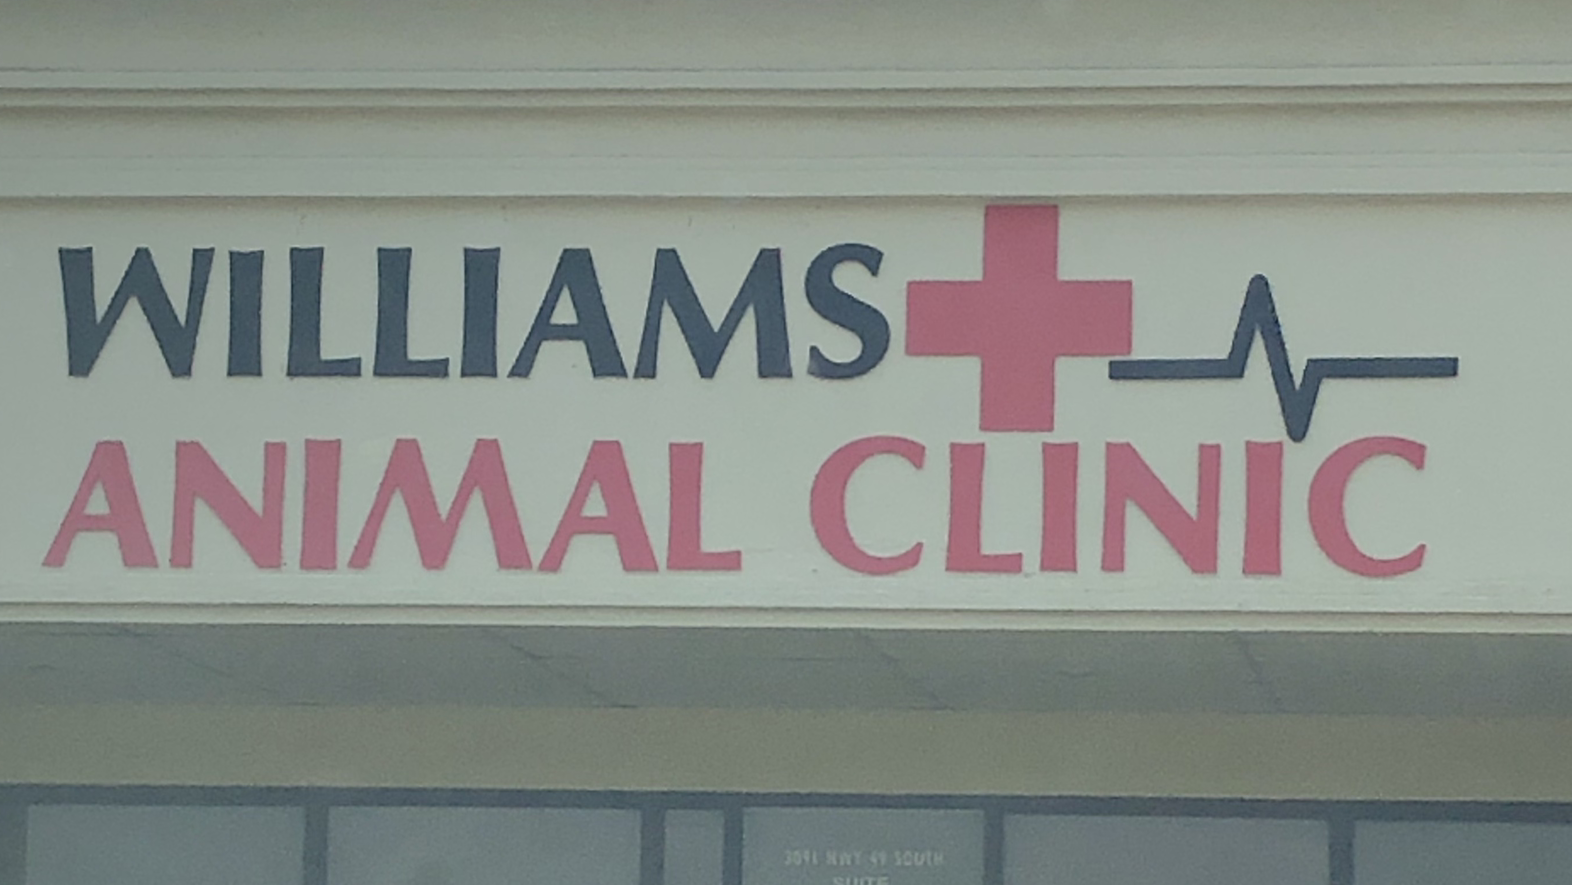 Williams Animal Clinic